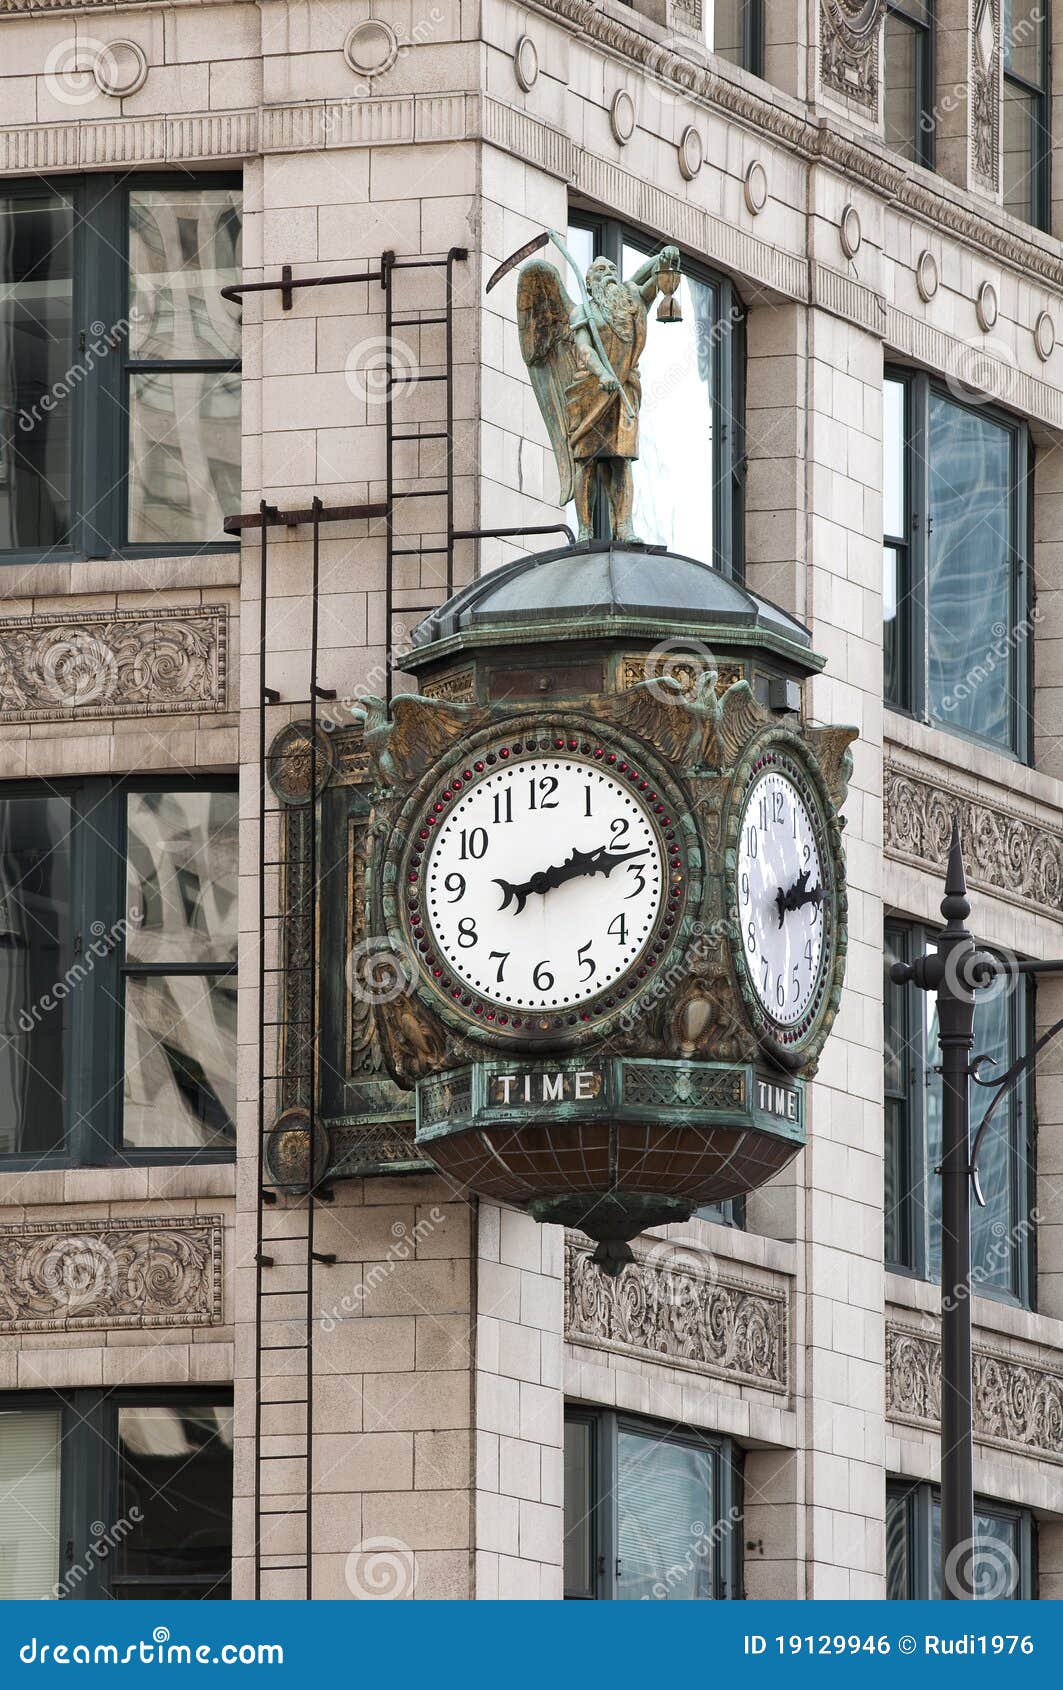 Reloj De La Calle De Chicago Foto archivo - Imagen de recorrido, illinois: 19129946